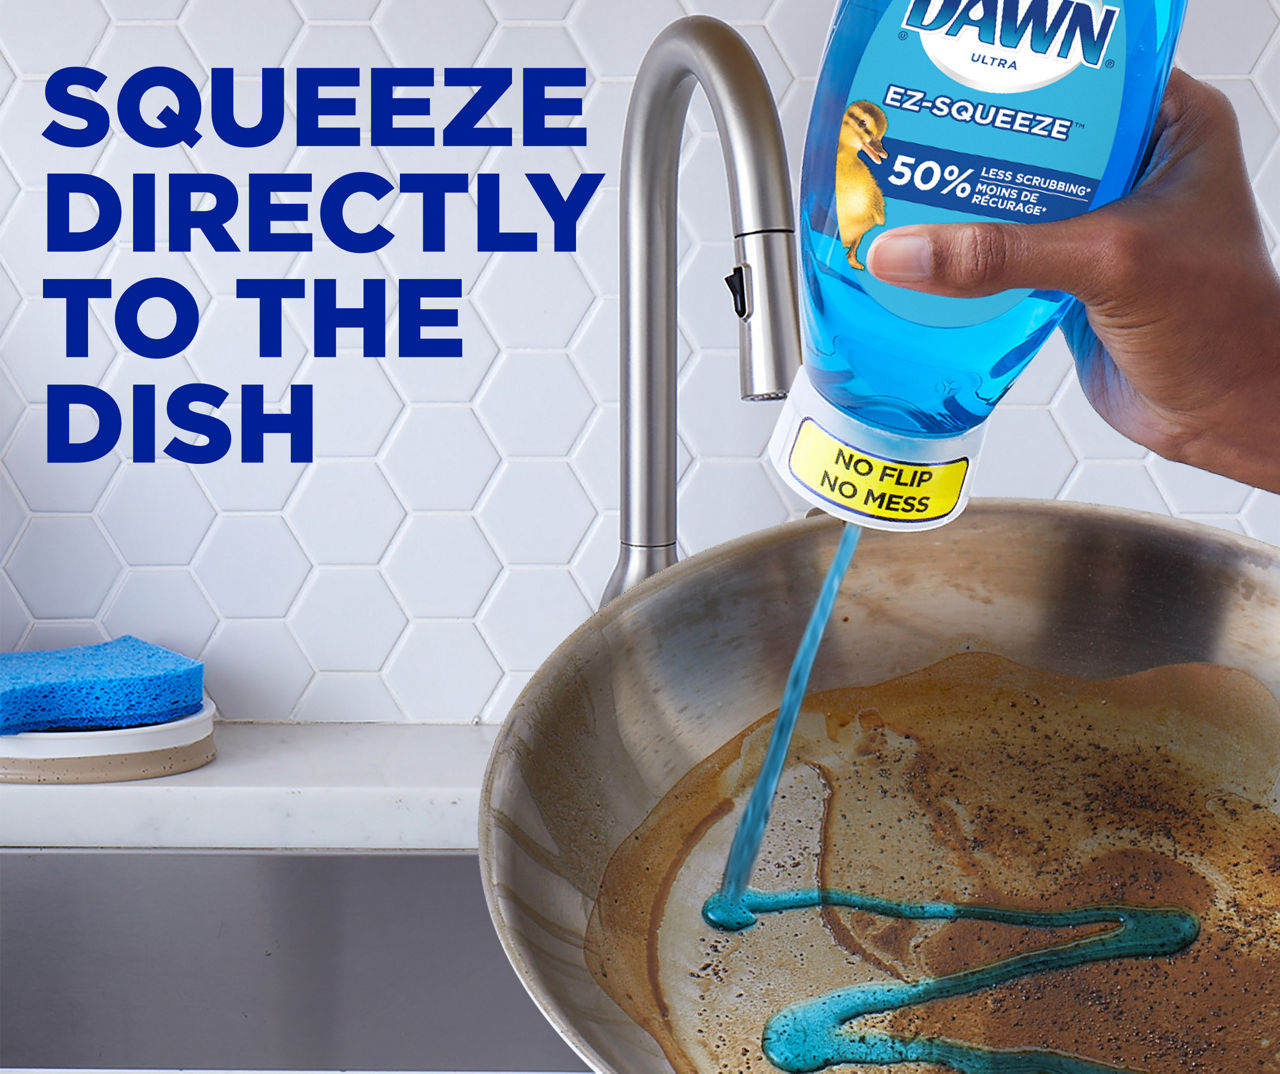 DUO Quick-drain Soap Dish